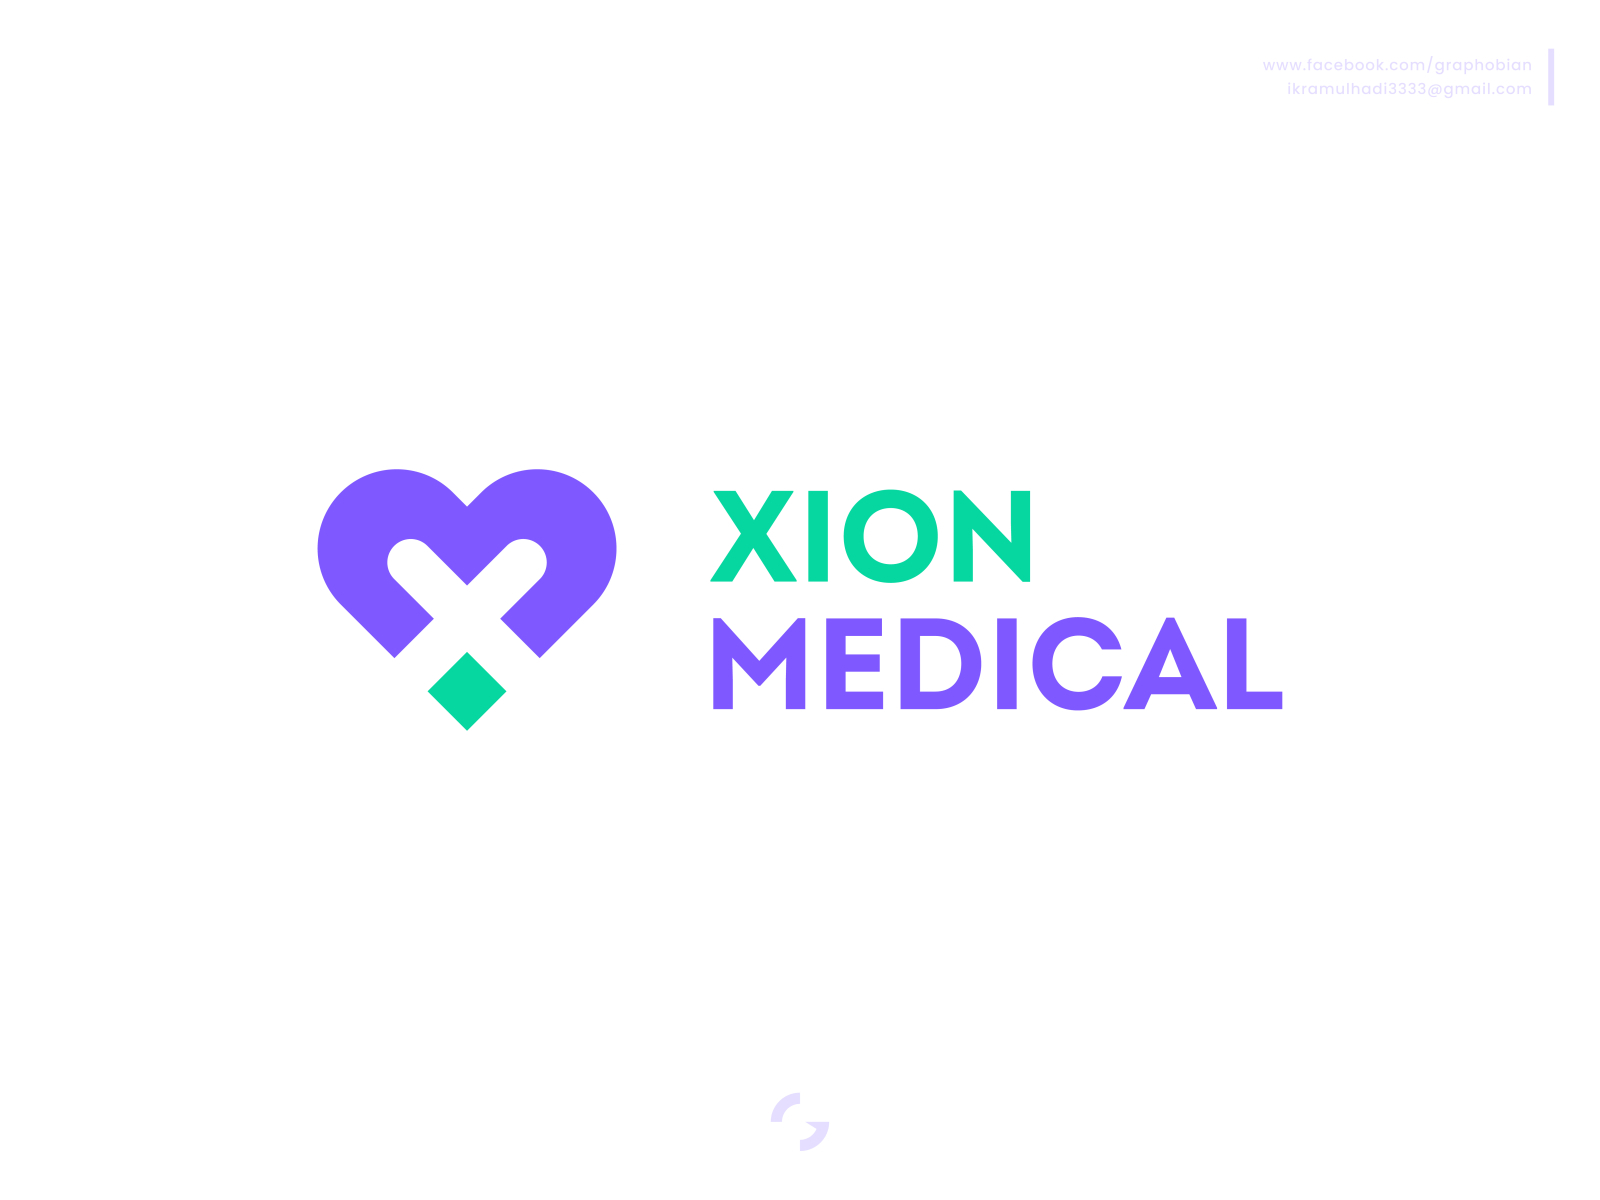 Xion Medical By Ikramul Hadi Khan | Graphobian On Dribbble